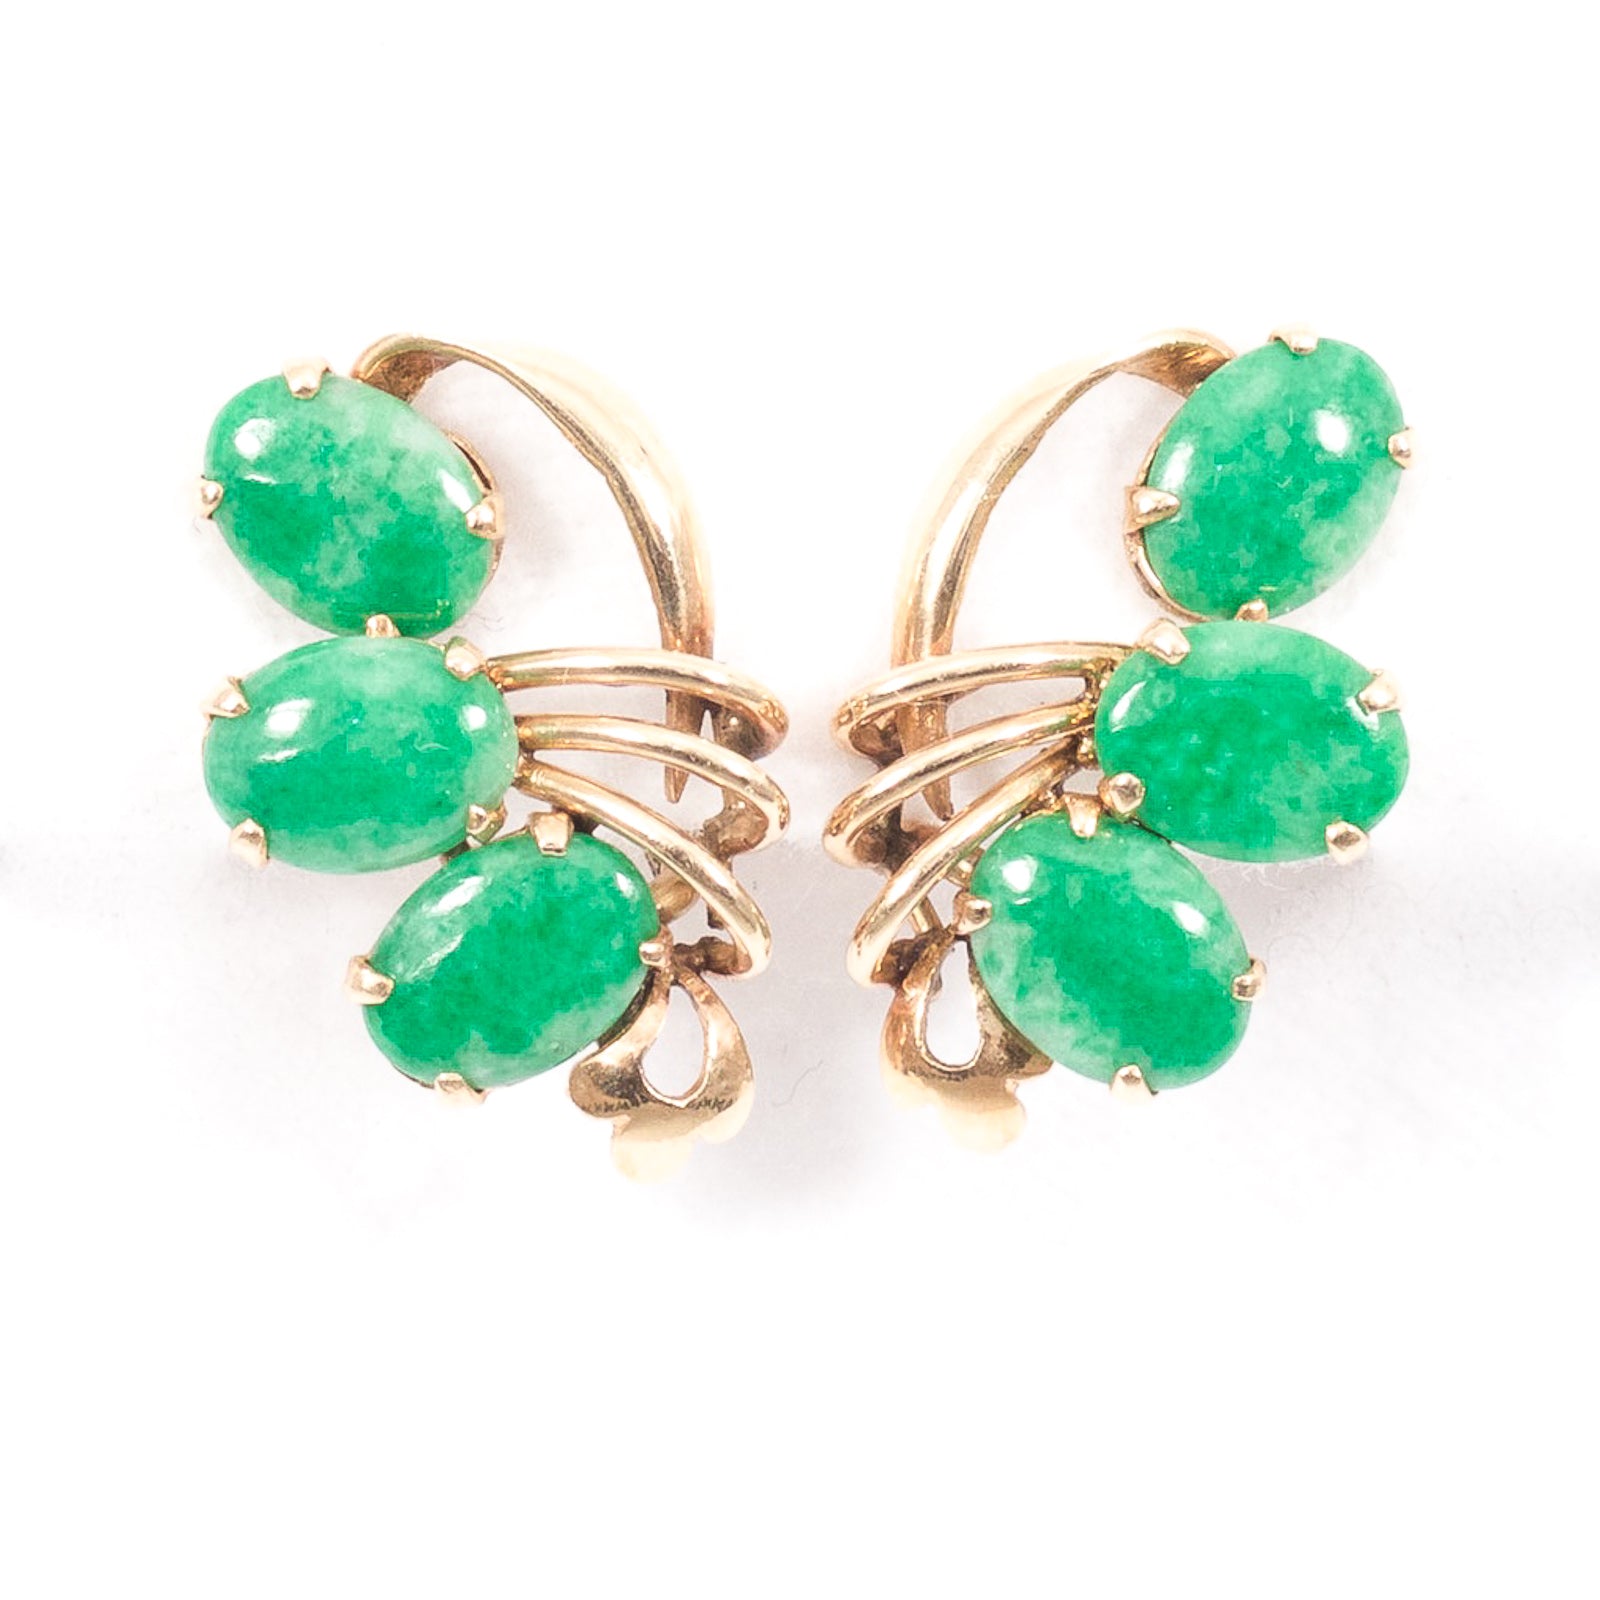 SOLD 9ct Gold Jade Drop Earrings - Honey Lane Antiques NI